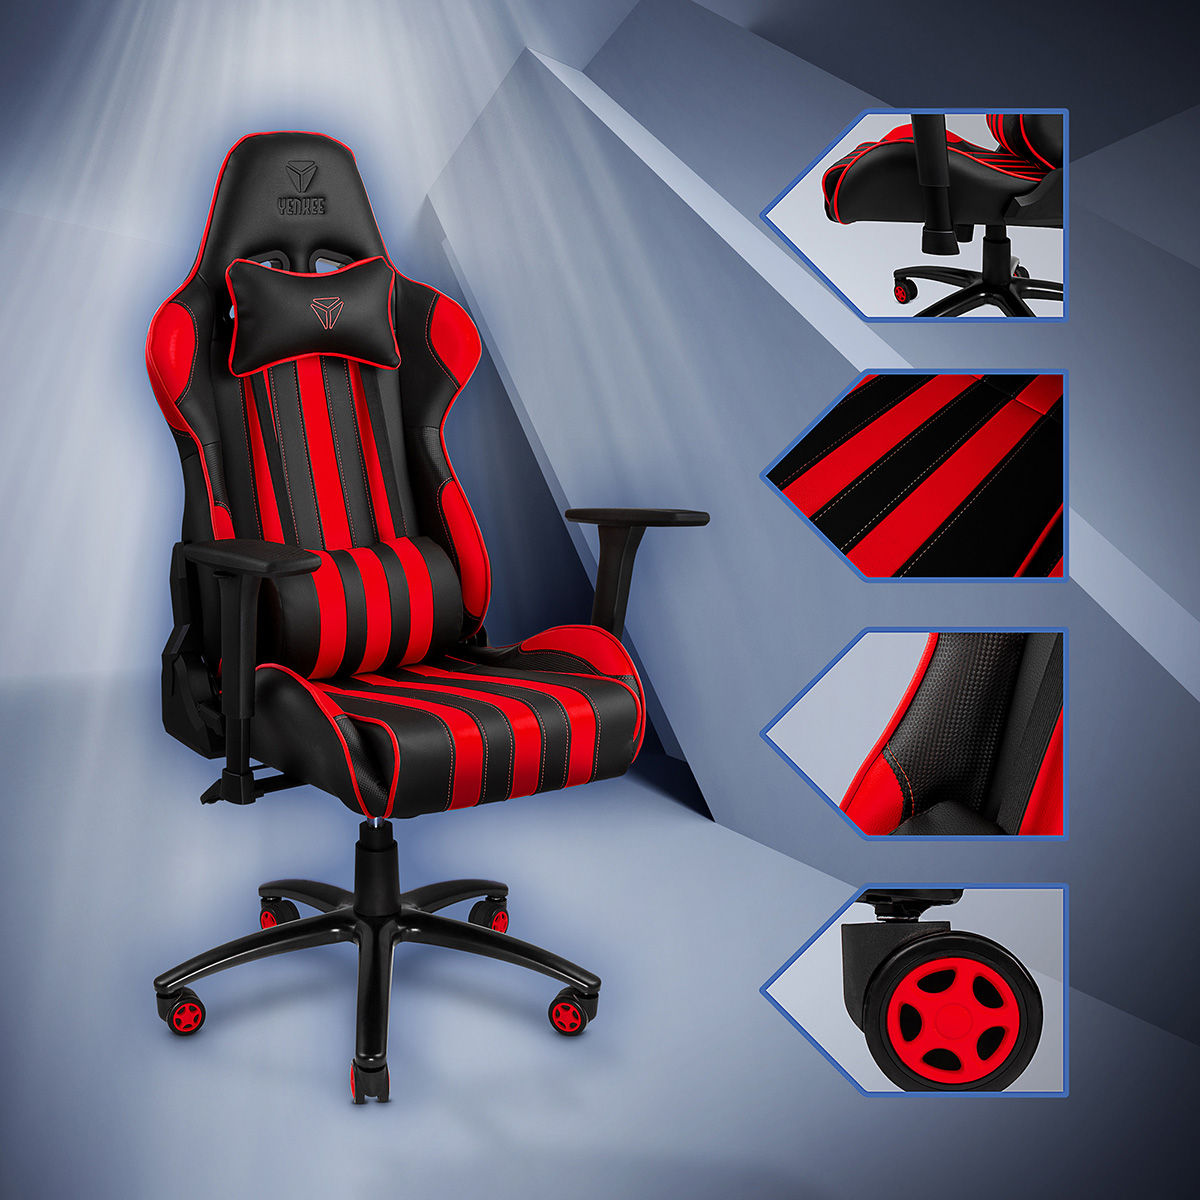 A chair that’s got what it takes